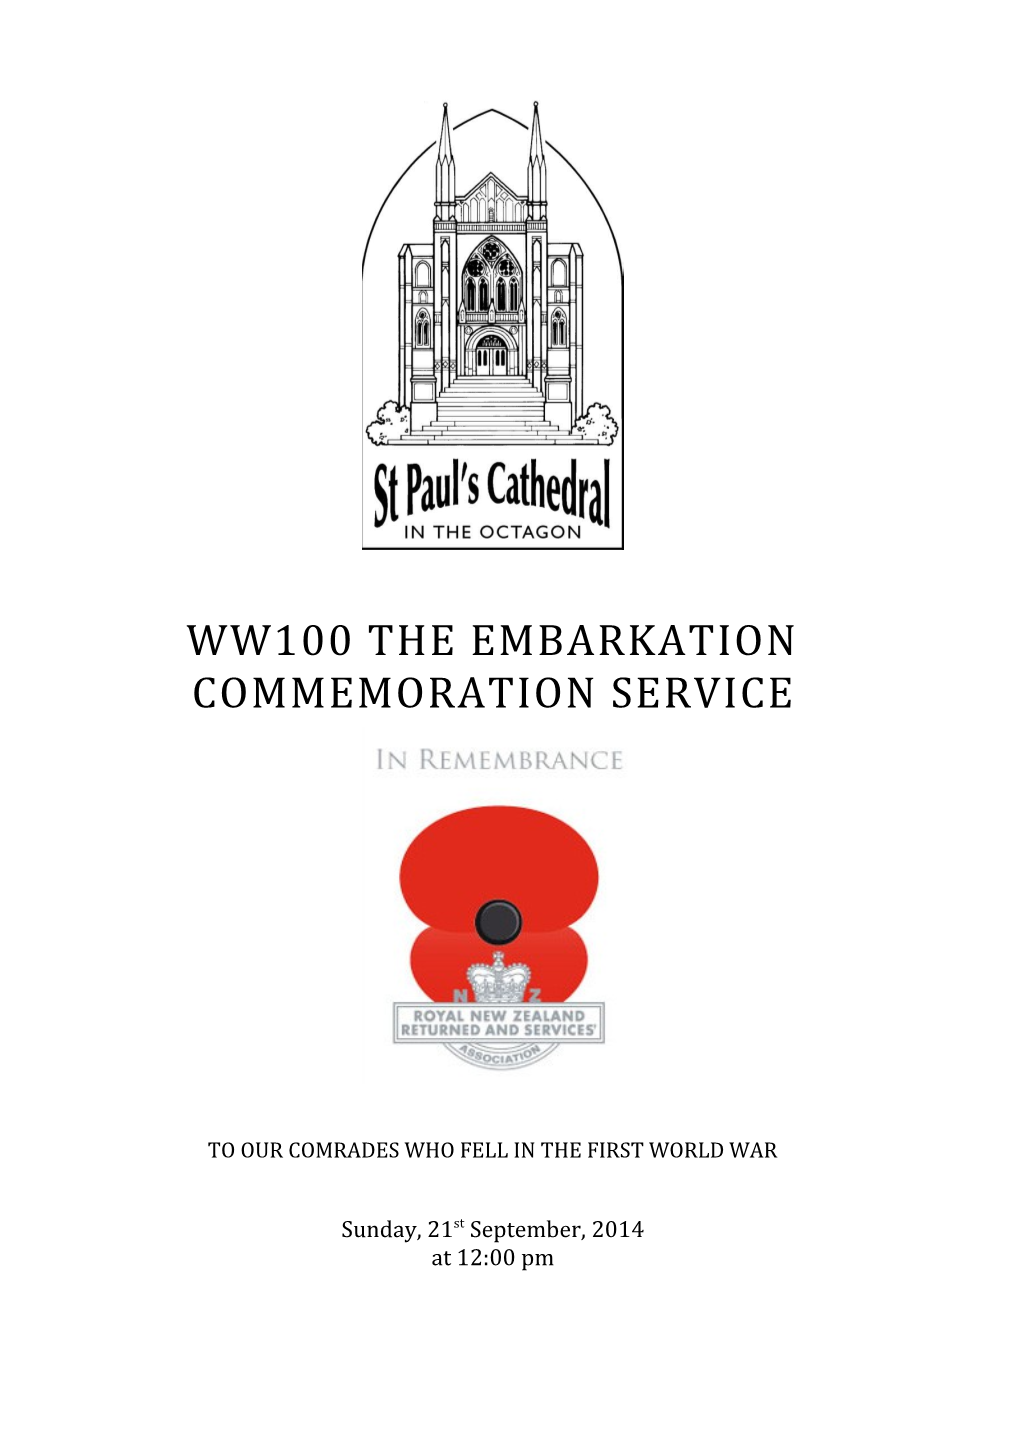 Ww100 the Embarkation Commemoration Service